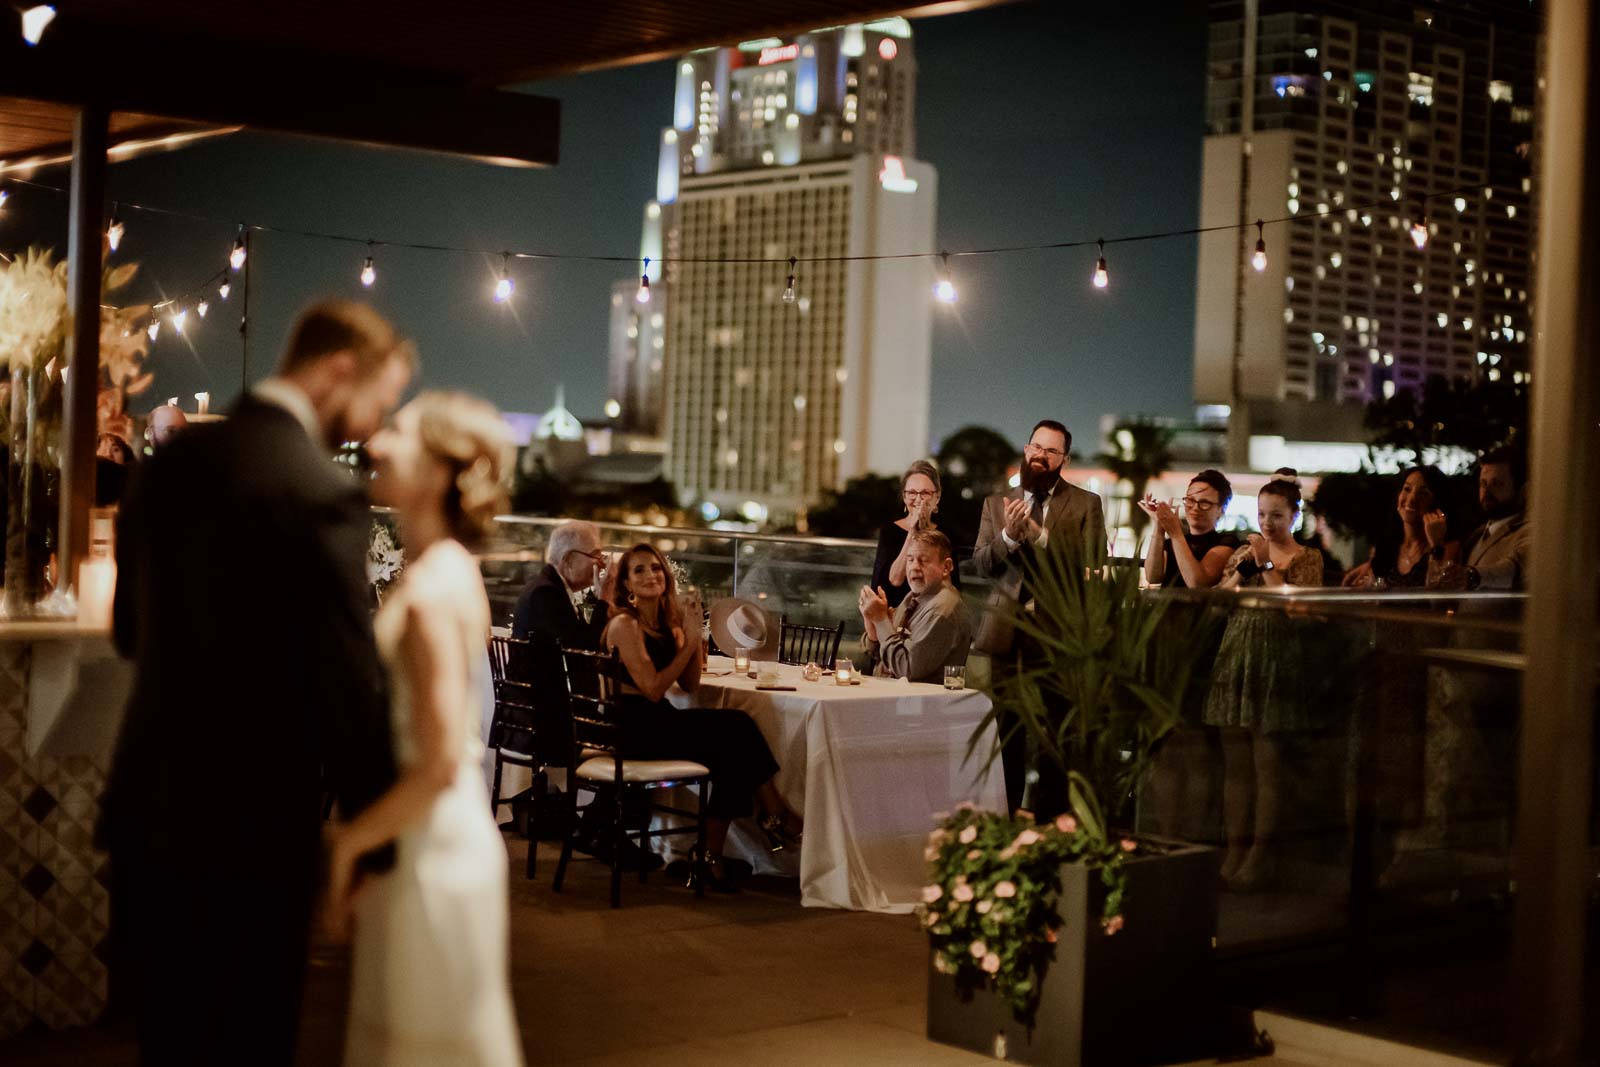 043 The Fairmount Hotel Rooftop Oyster Bar Wedding Reception Leica photographer Philip Thomas Photography